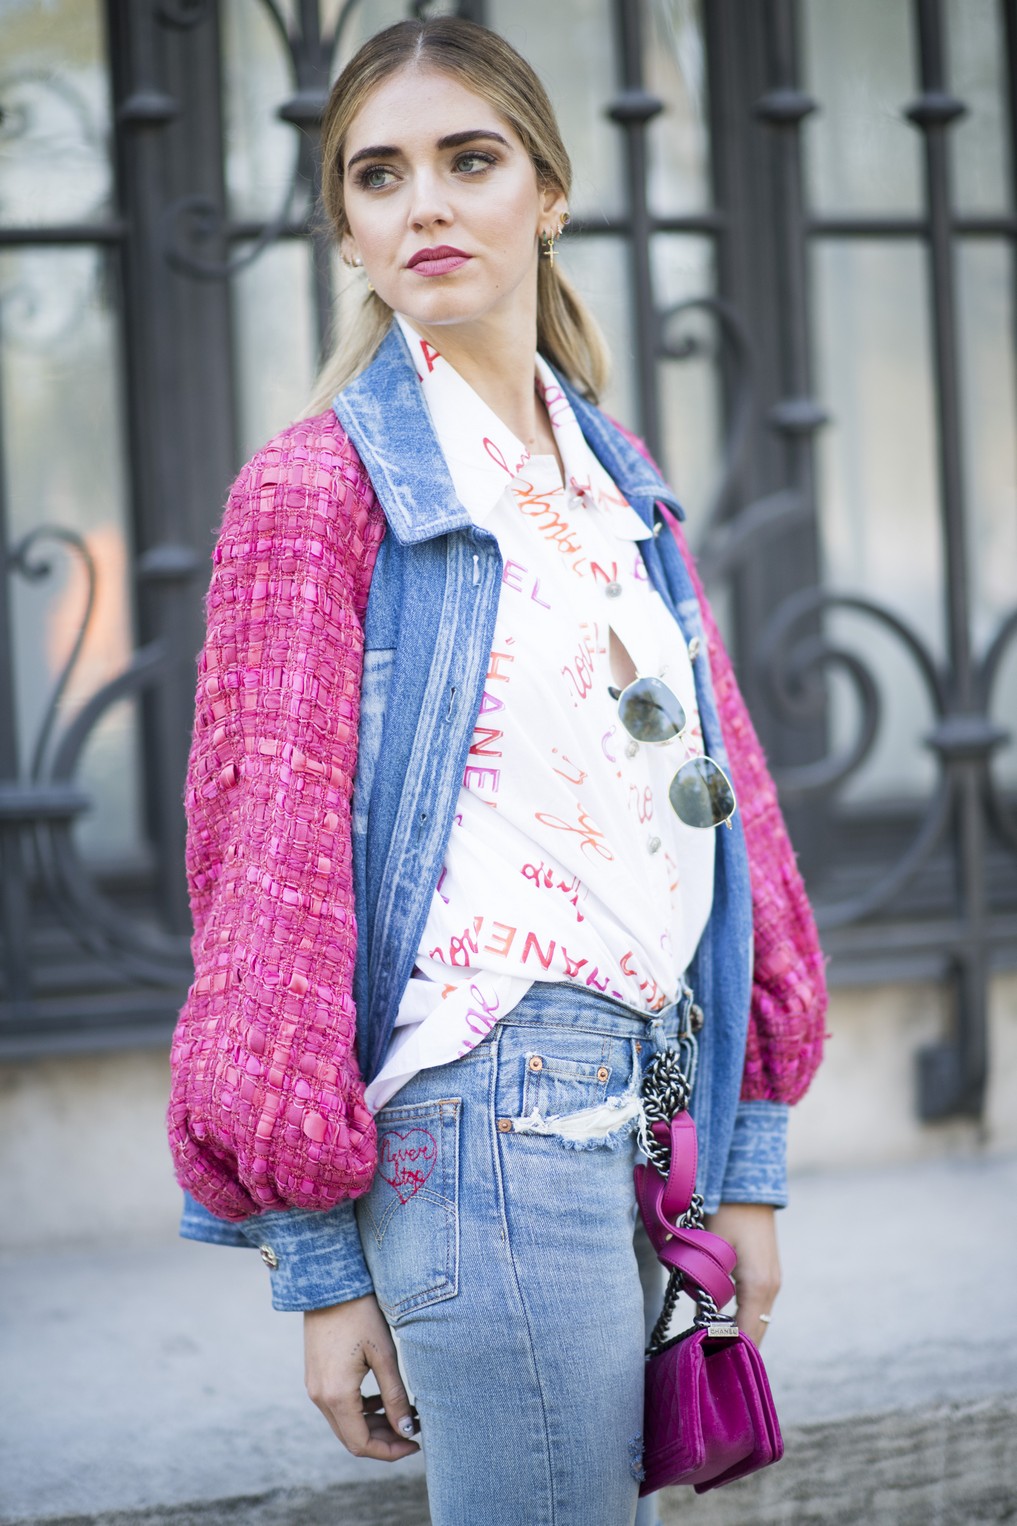 Chiara Ferragni Wears Levi’s x The Blonde Salad Jeans & a Chanel Denim Jacket